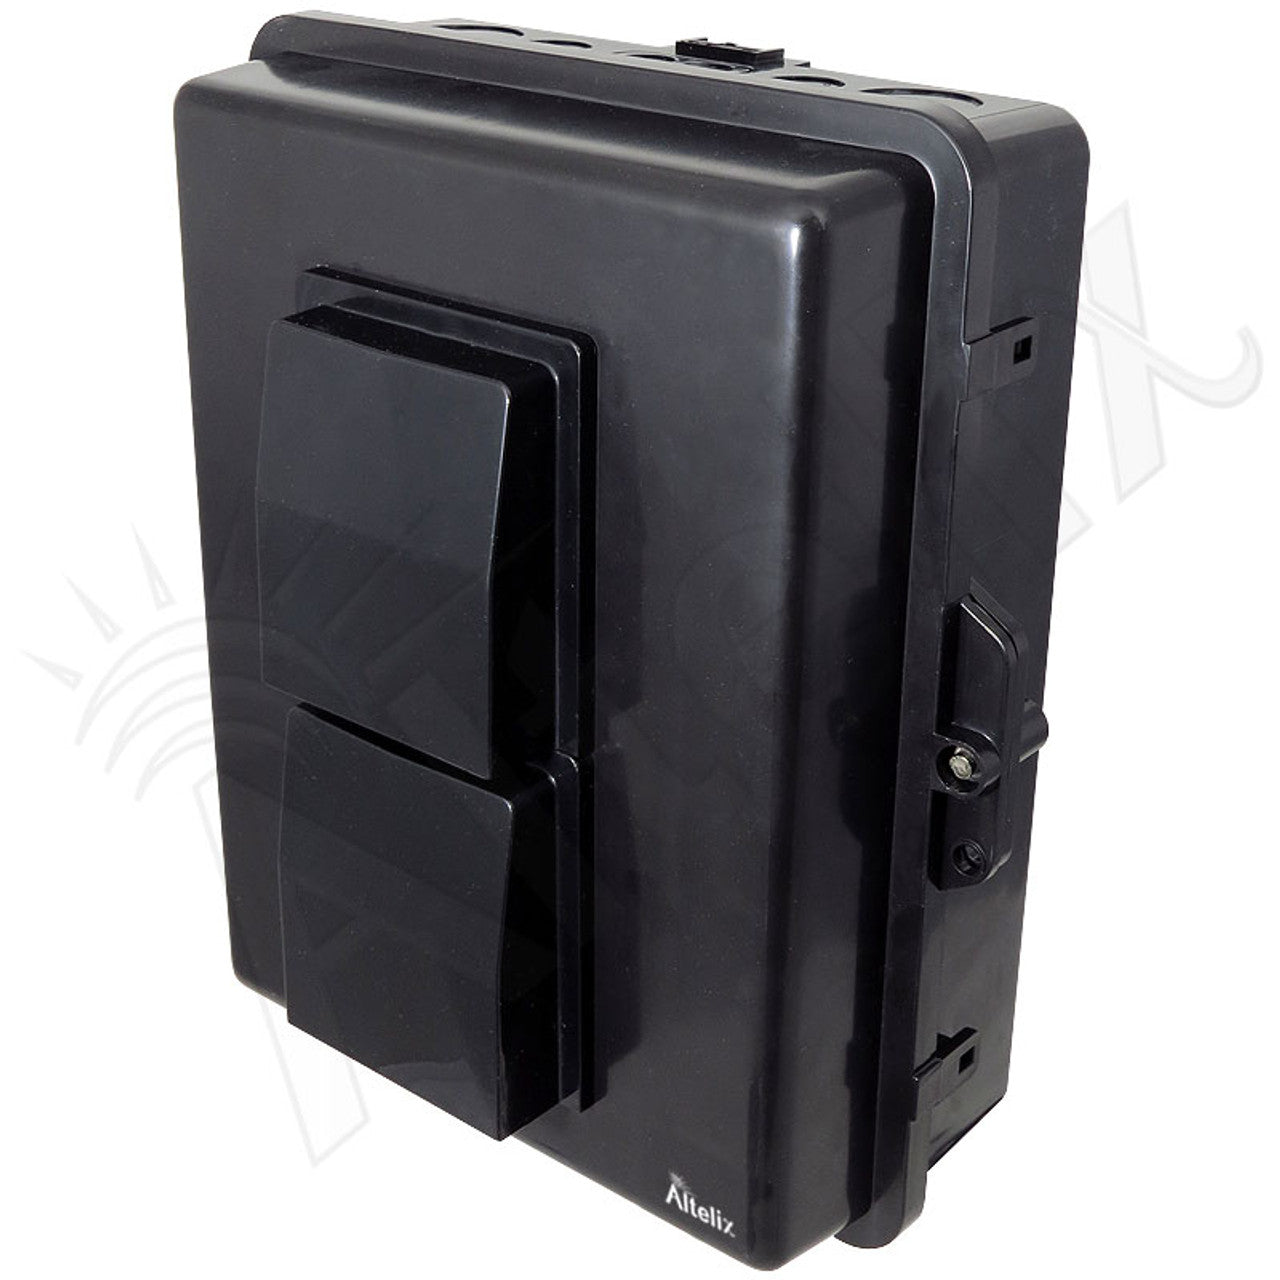 Buy black Altelix 14x11x5 PC + ABS Weatherproof Vented Utility Box NEMA Enclosure with Hinged Door